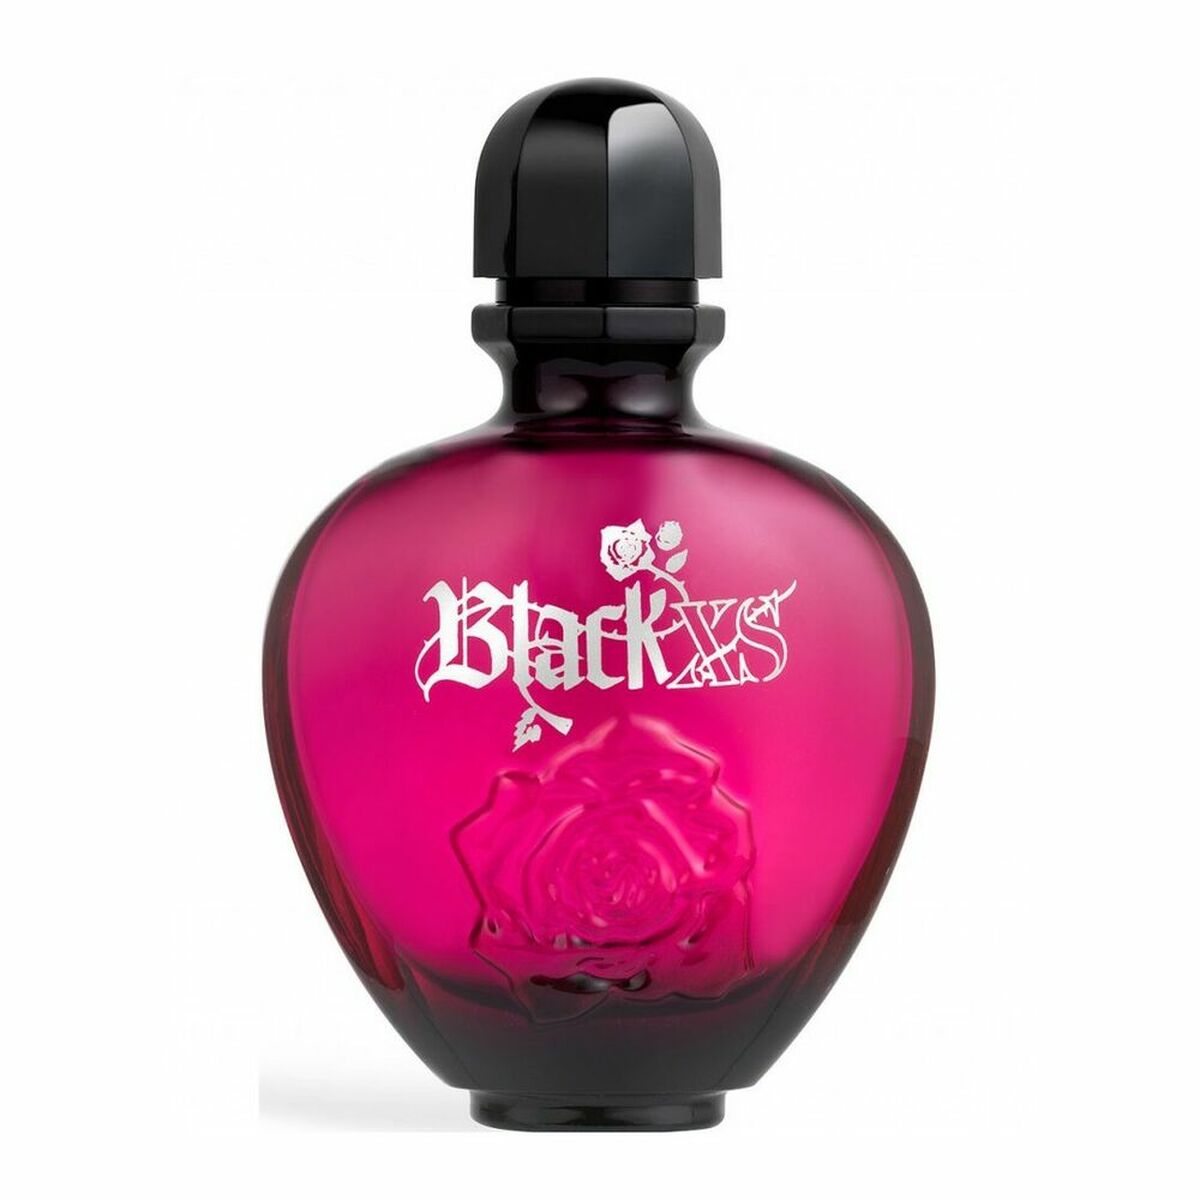 Kaufe Paco Rabanne EDT Black Xs Pour Elle 80 ml - Damen bei AWK Flagship um € 68.00